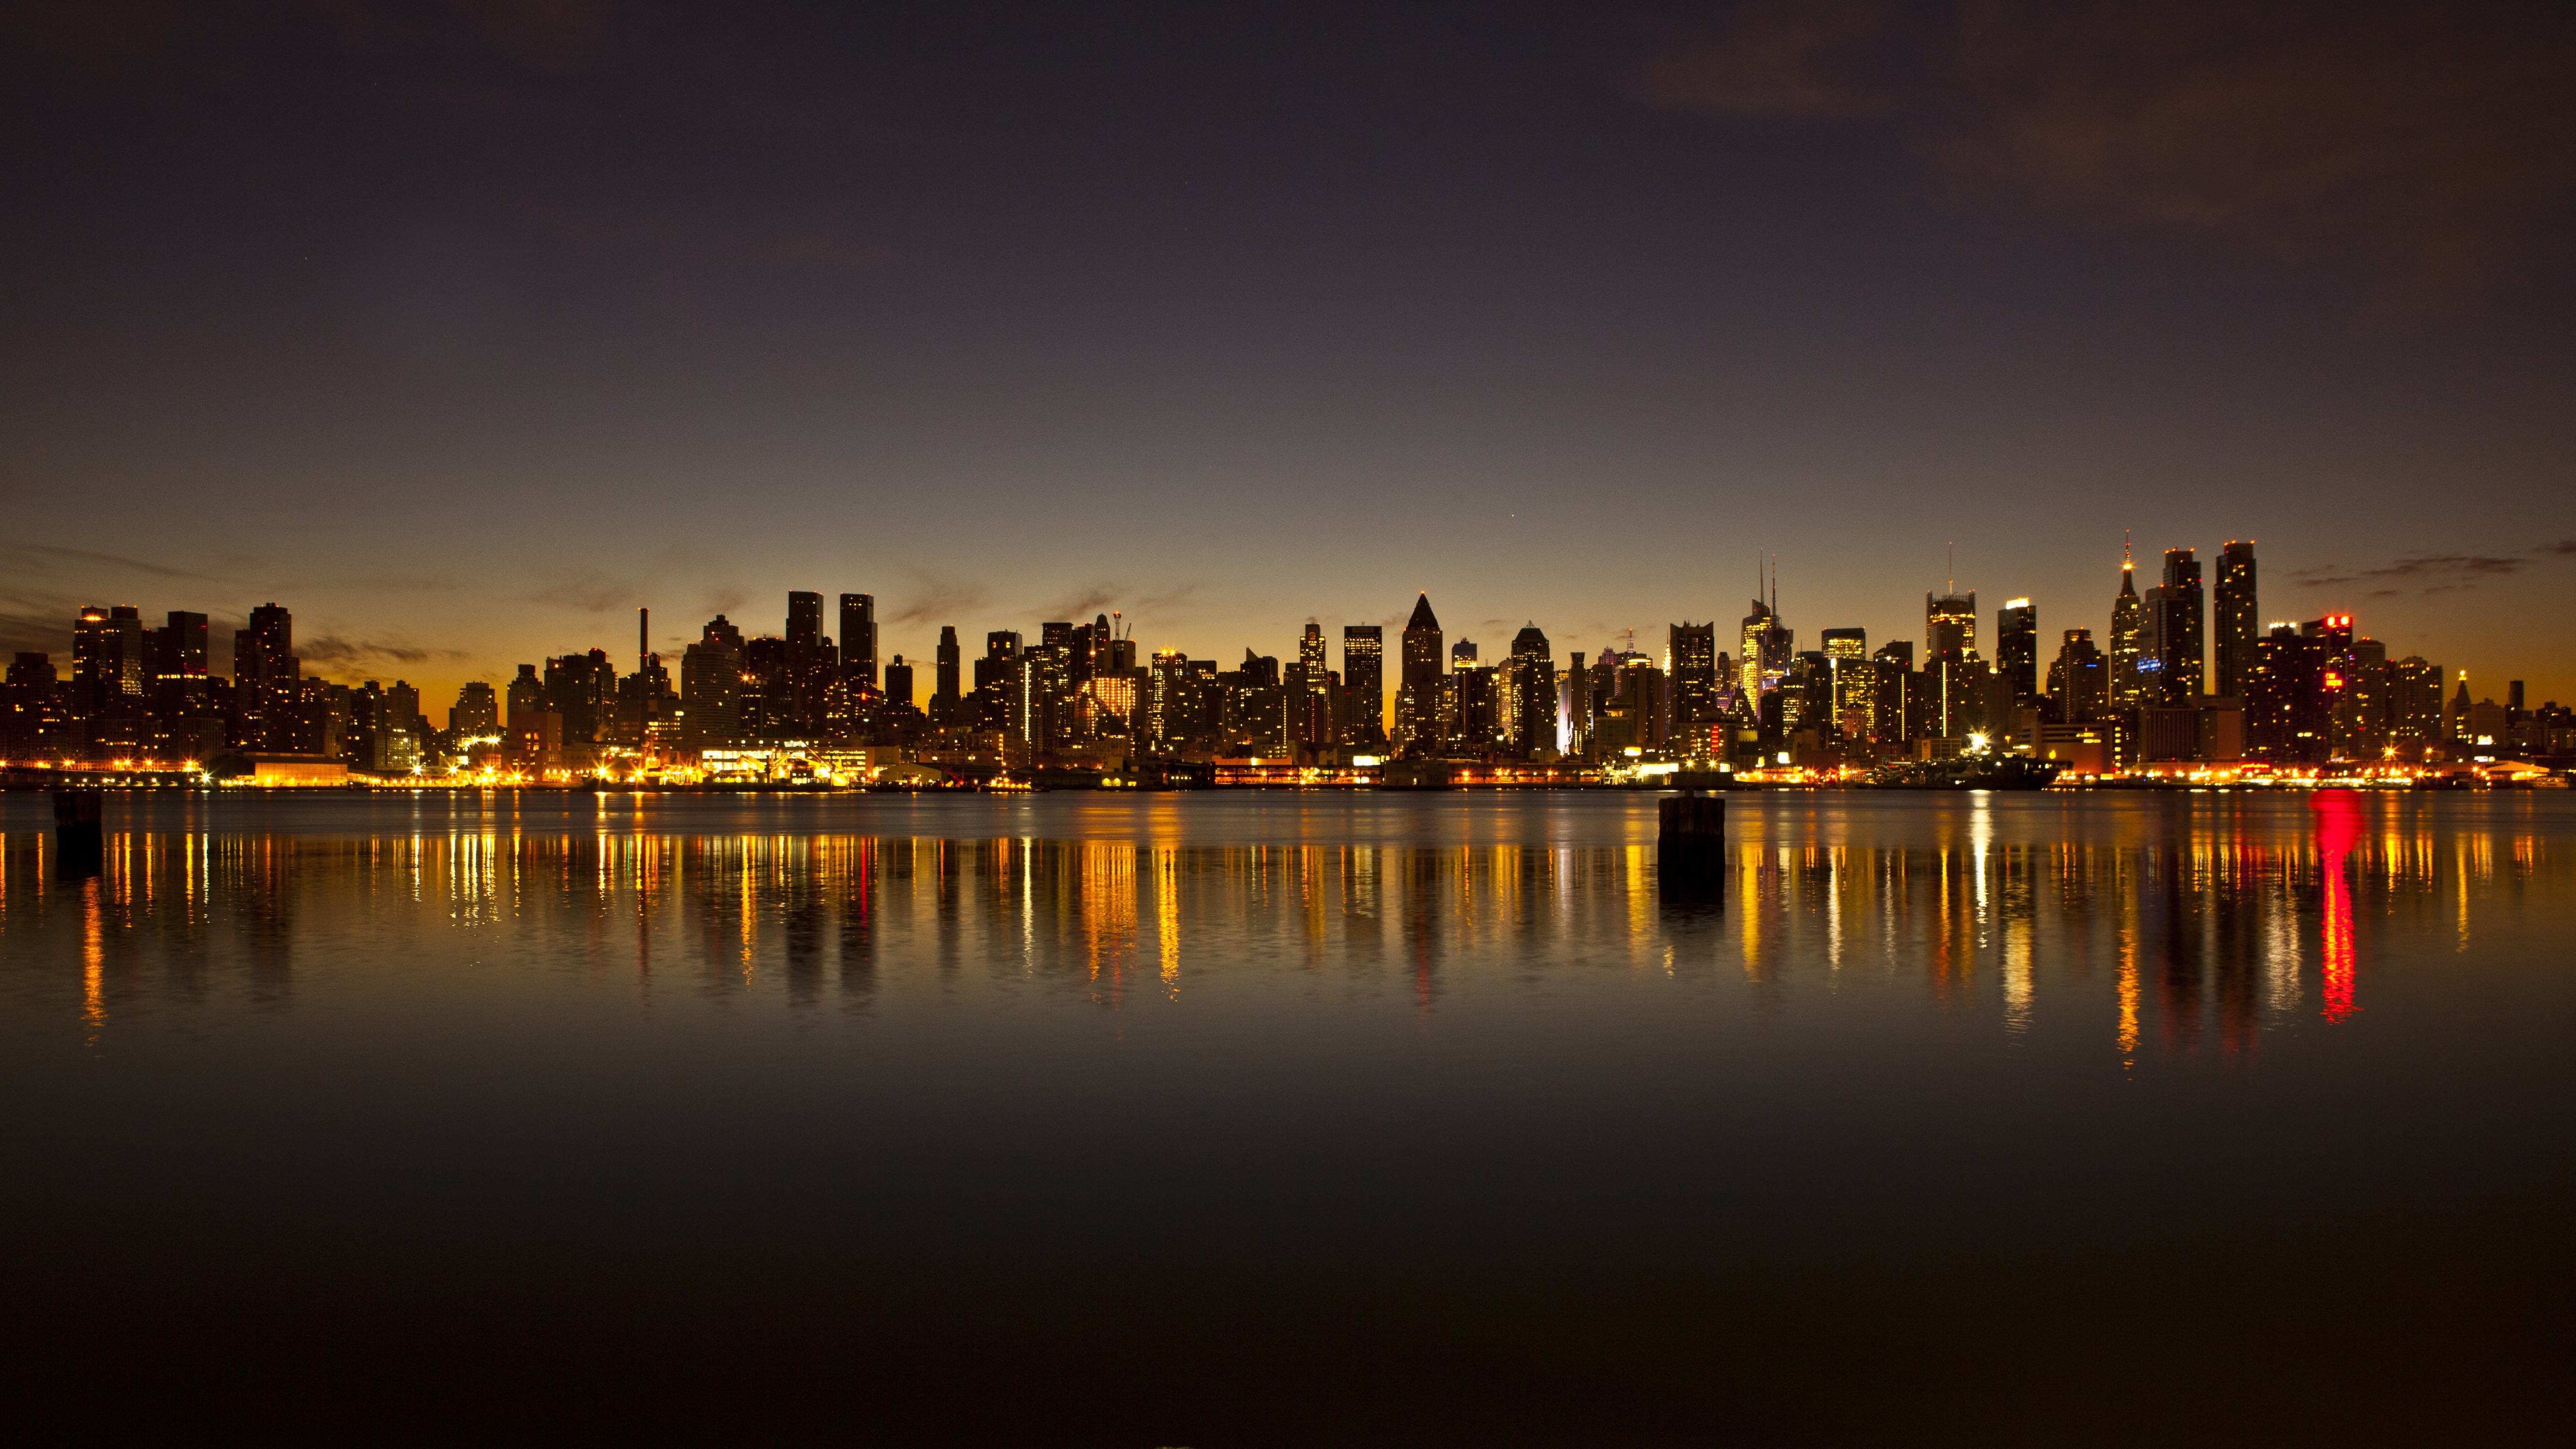 Download wallpaper: New York city skyline 5120x2880